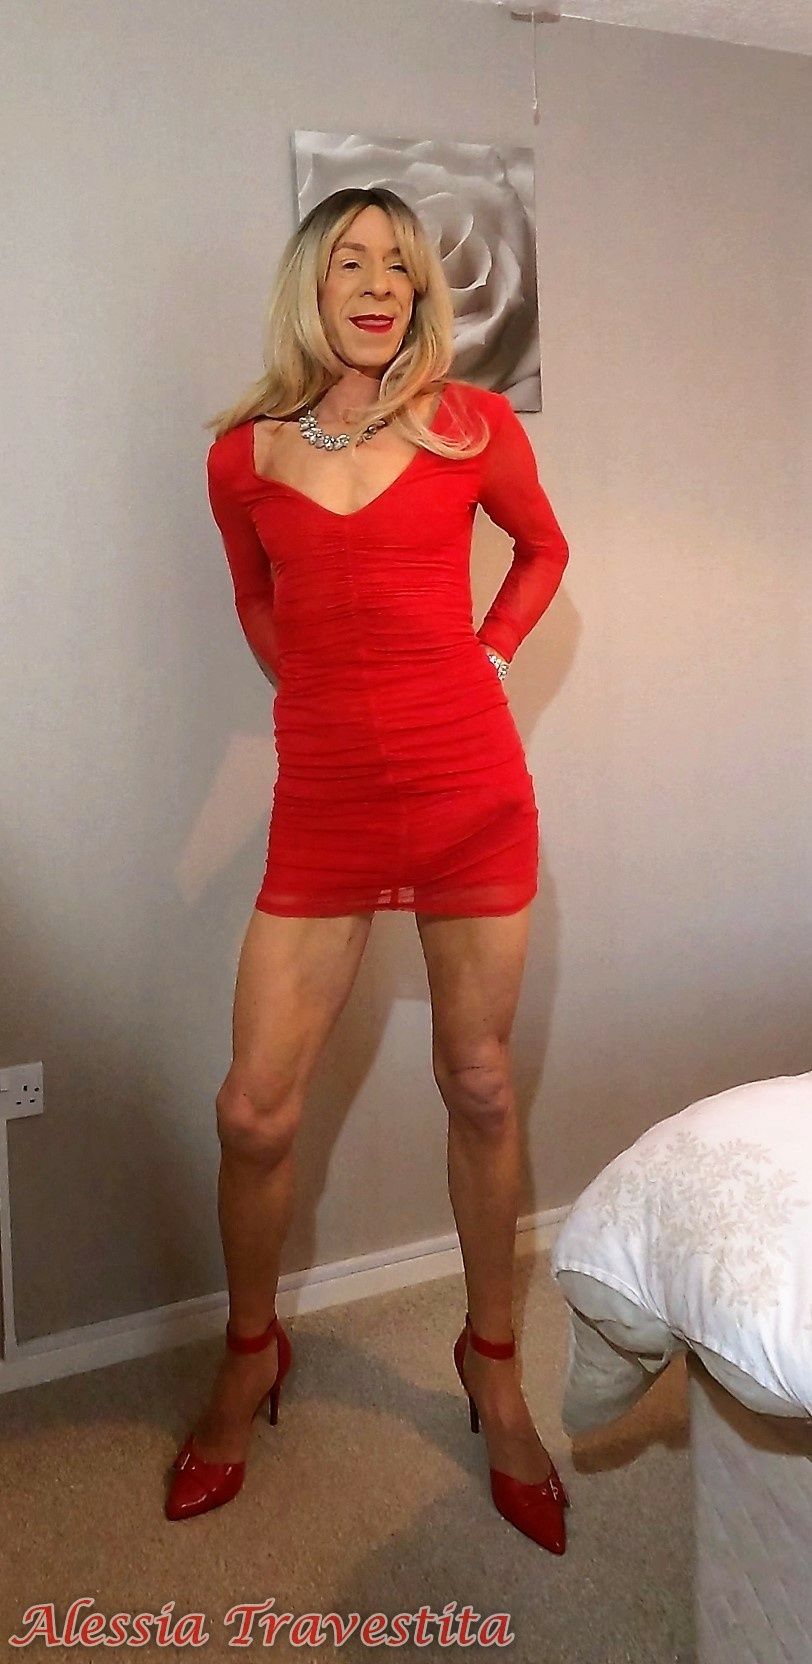 64 Alessia Travestita in Sheer Red Dress #13